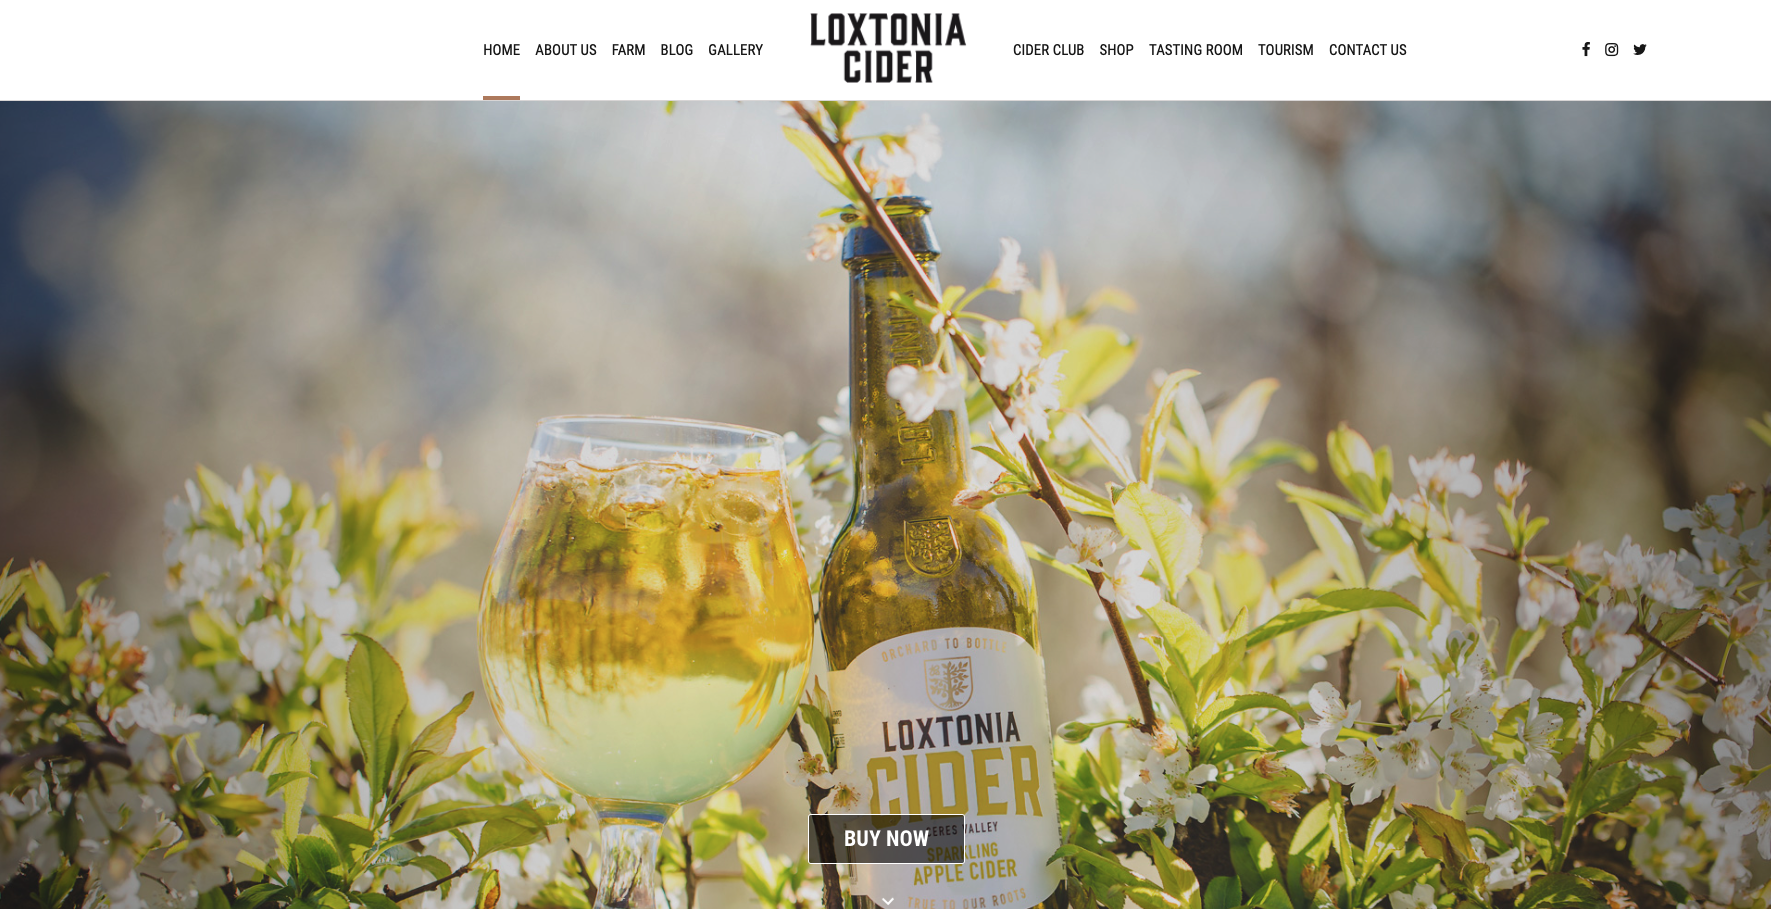 Loxtonia Cider Website Screenshot